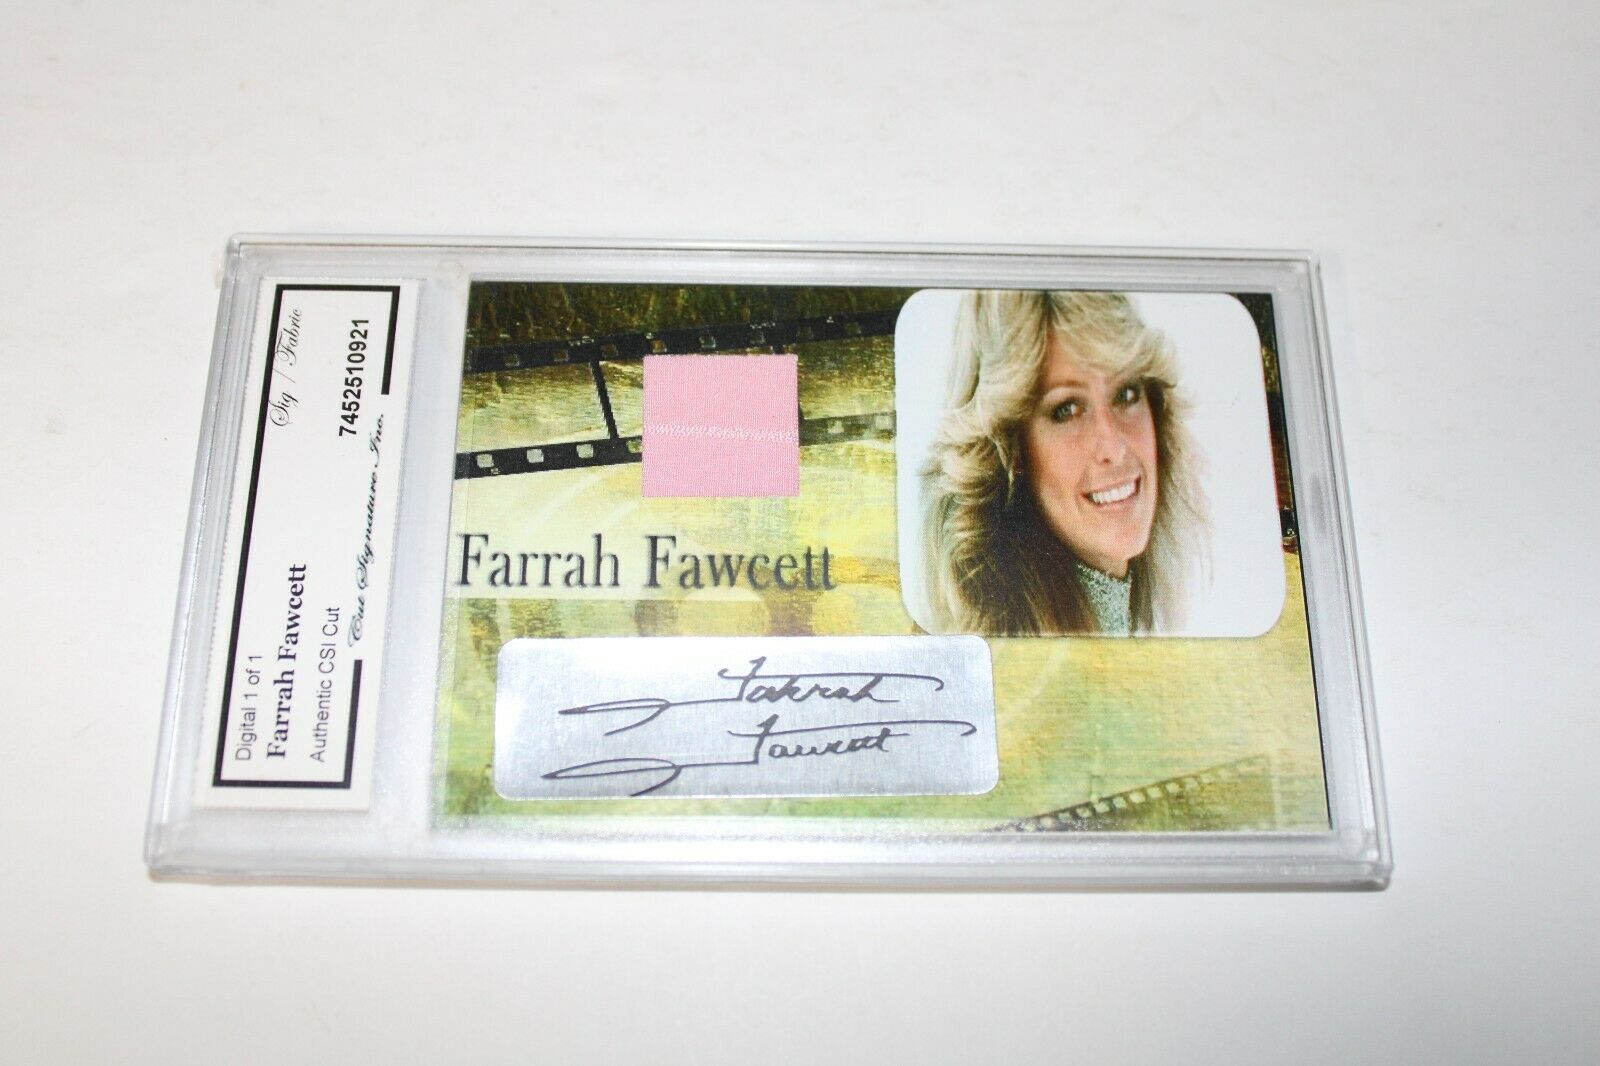 Farrah Fawcett, "authentic Csi Cut" Reprint Autograph, Replica Material Cut 1/1